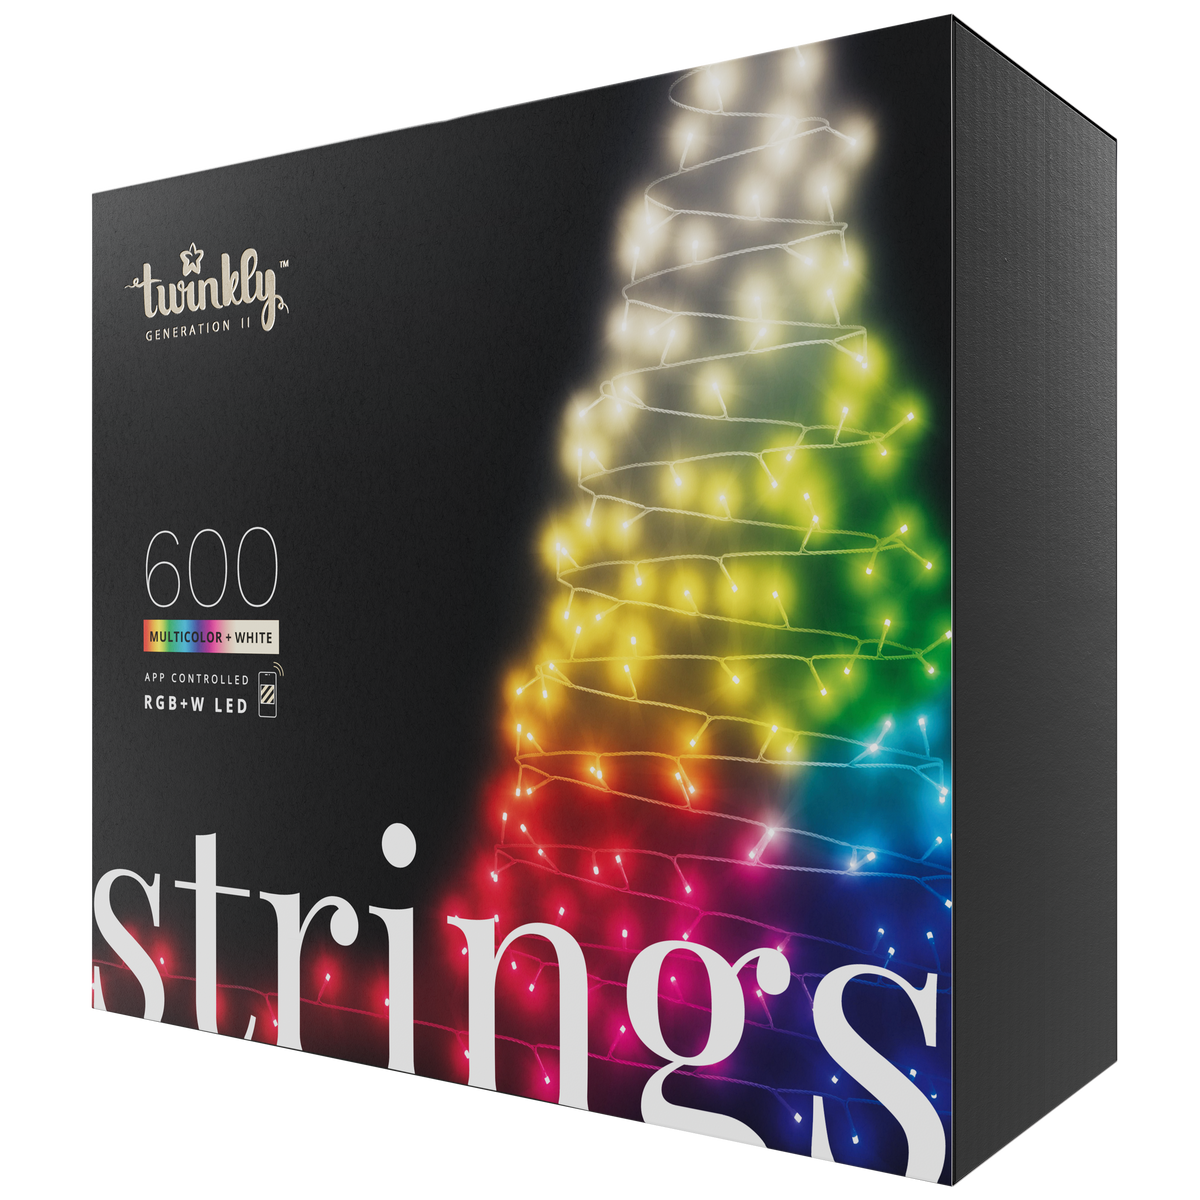 Strings (Multicolor + White Edition)